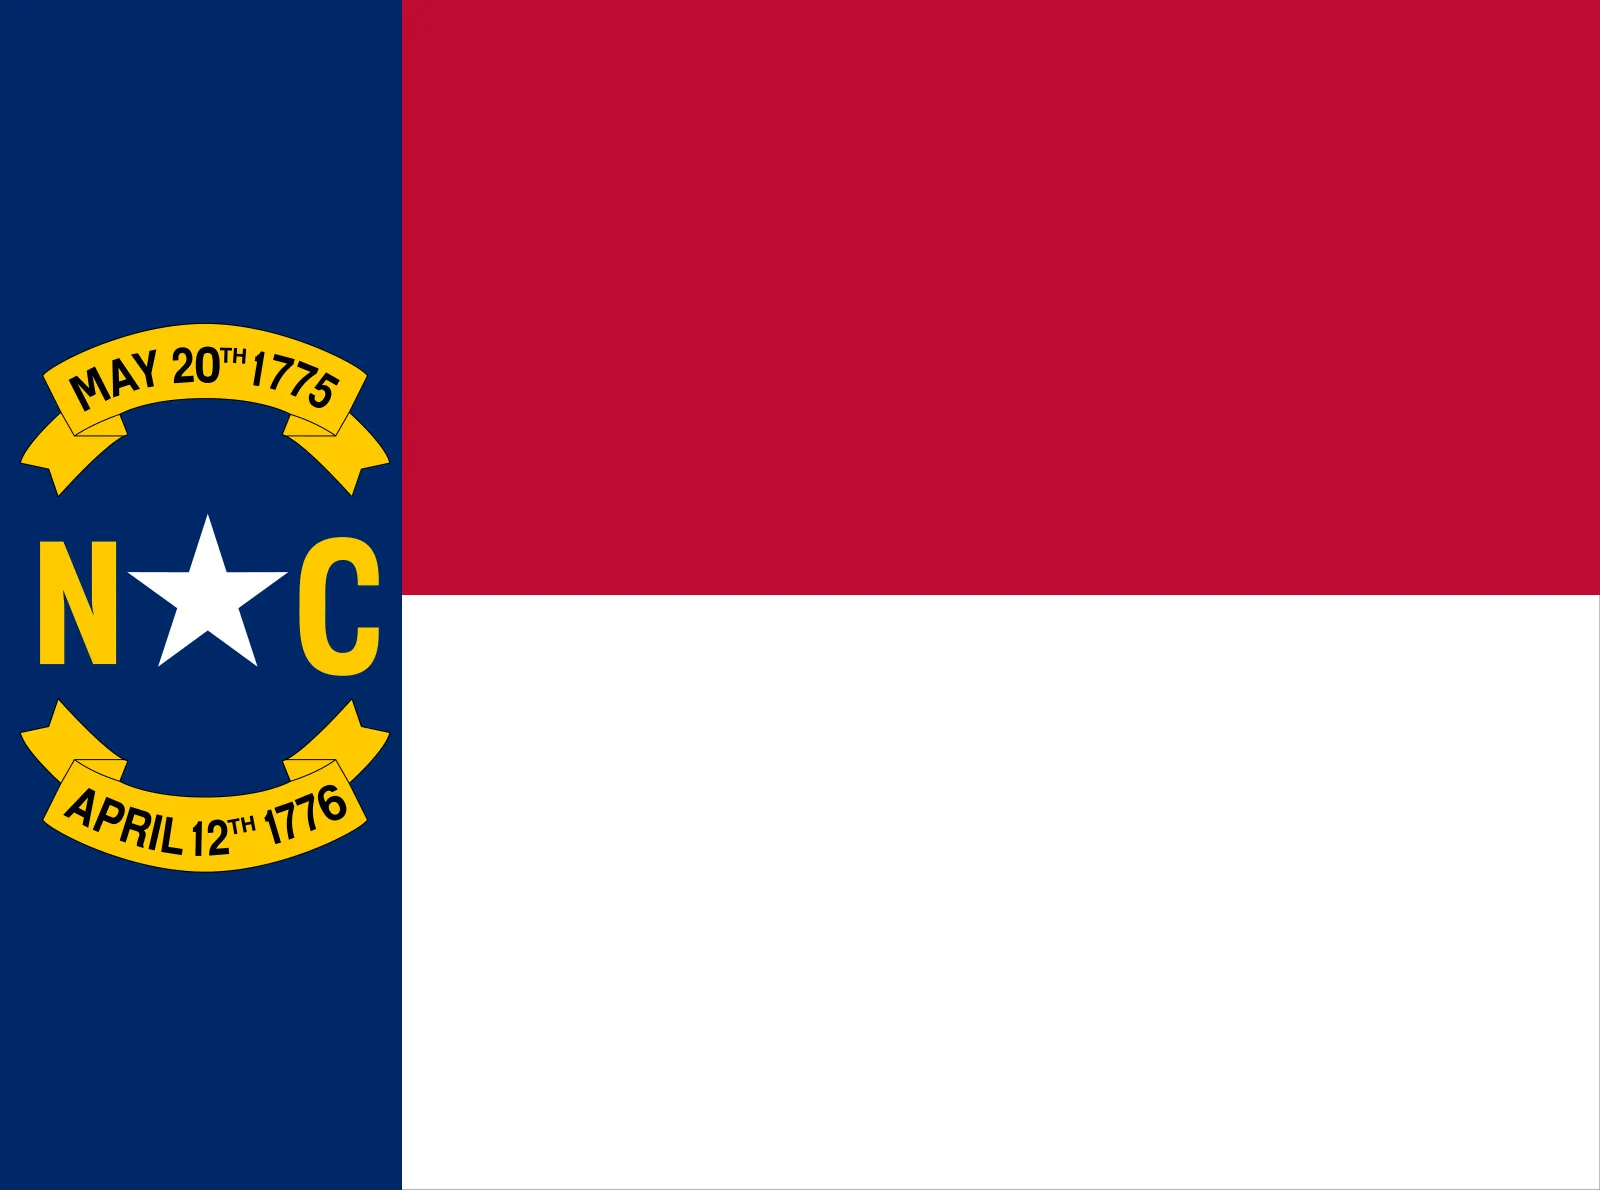 the North Carolina state flag